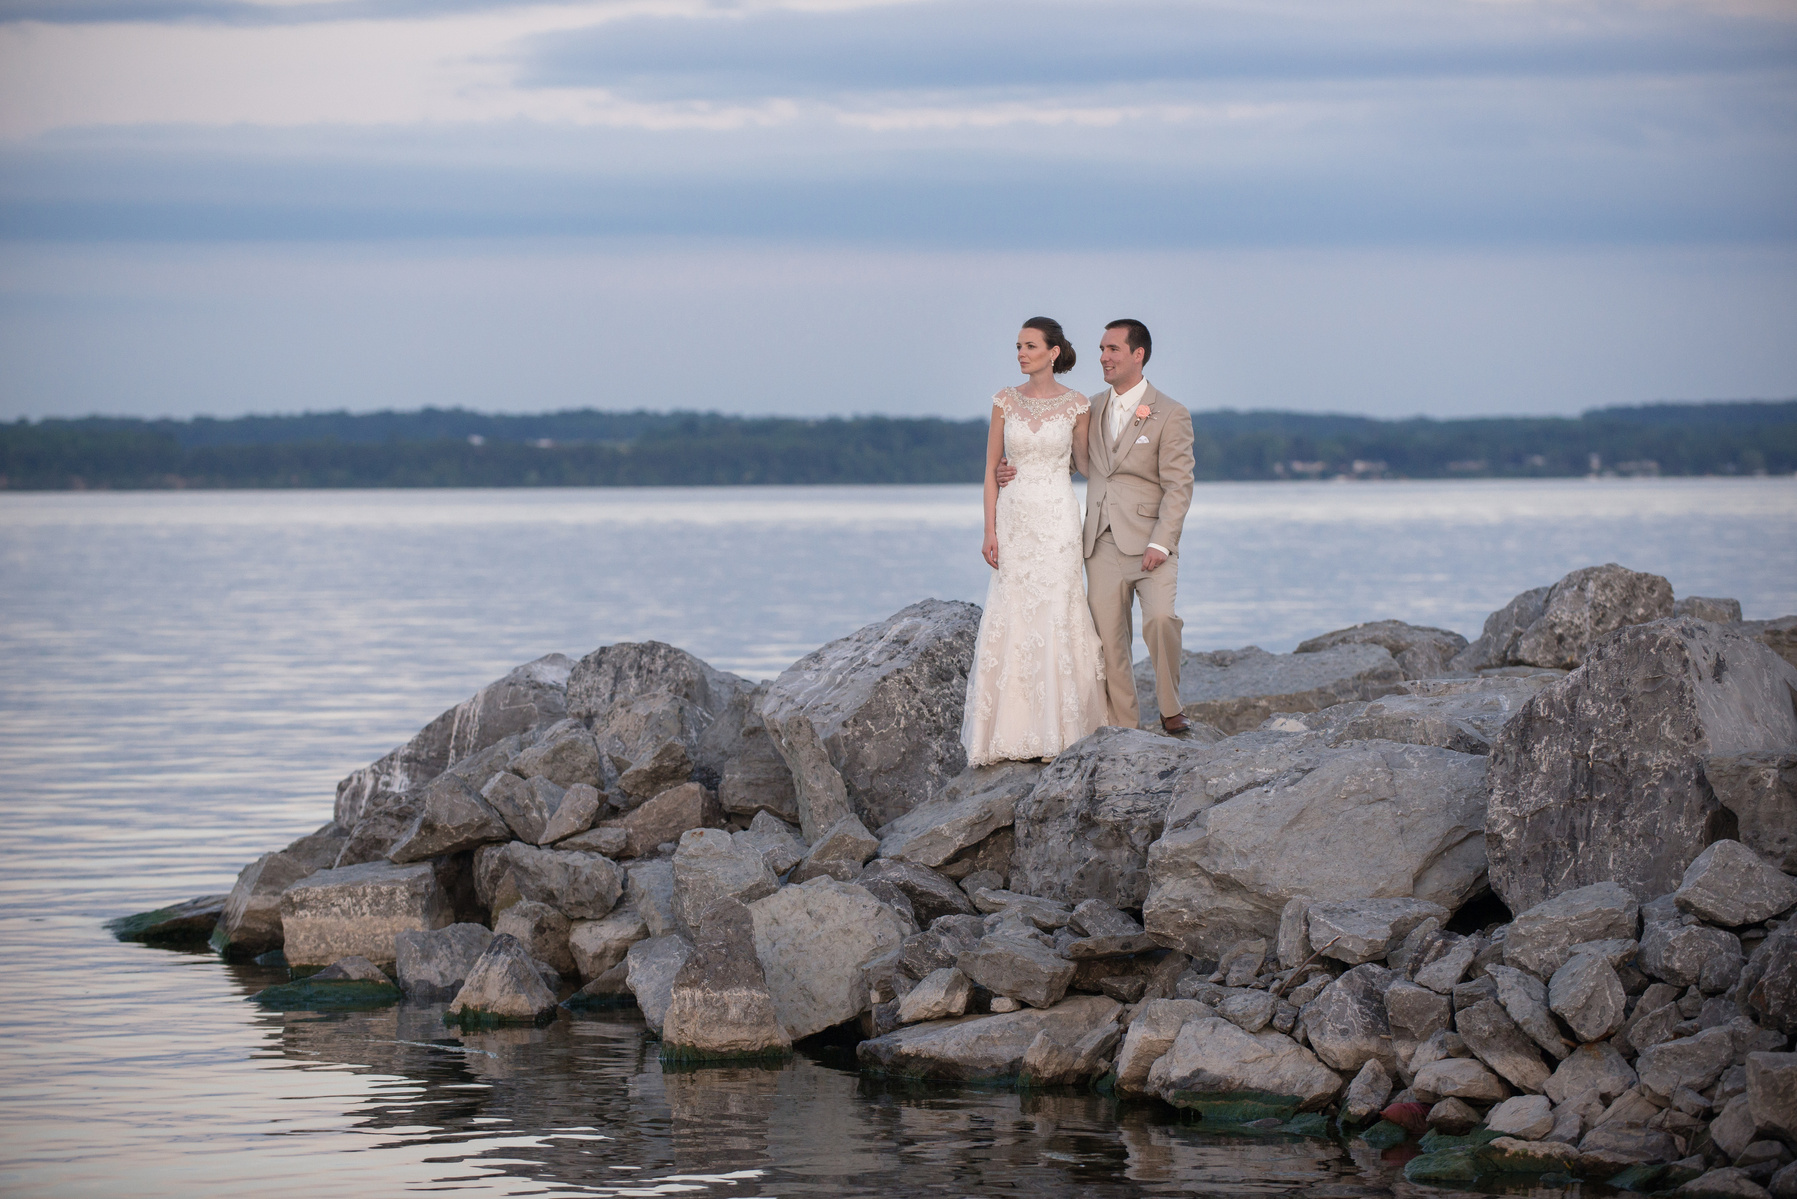 Geneva NY wedding on Seneca Lake